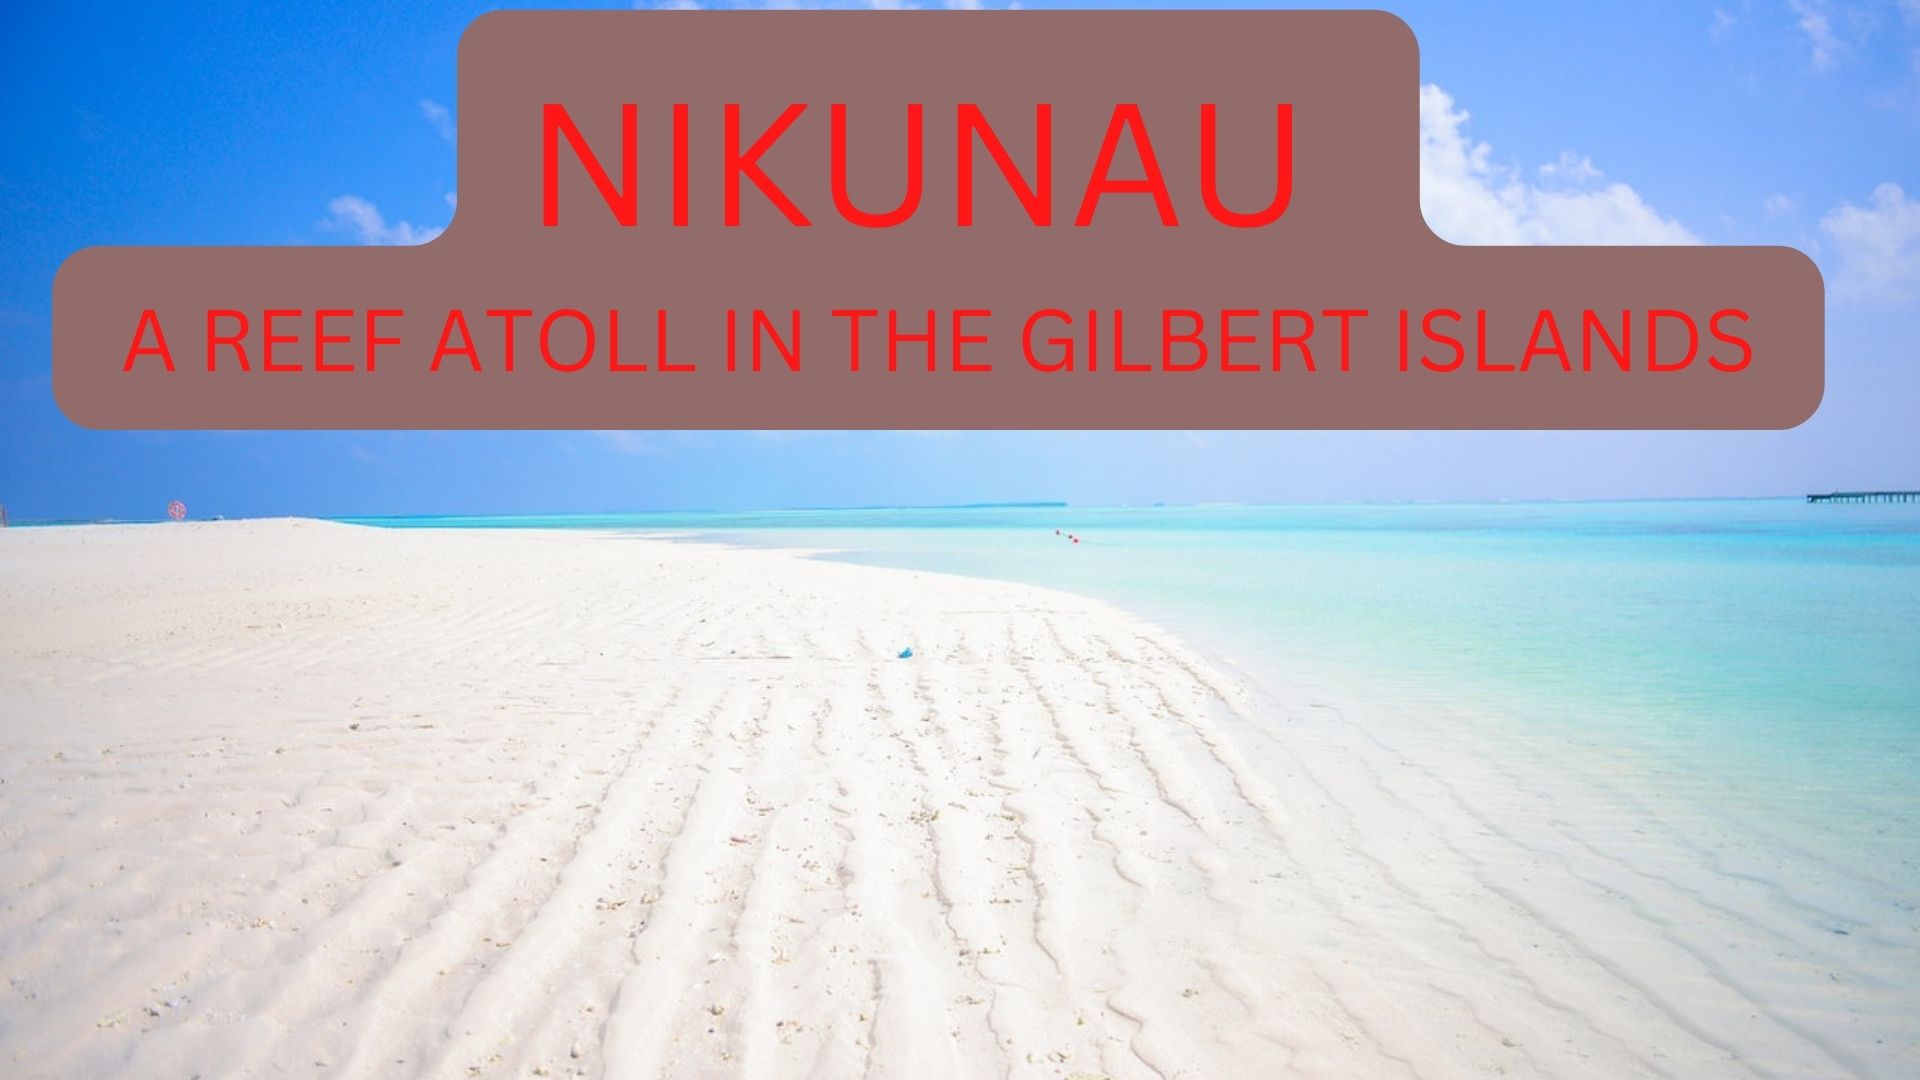 Nikunau - A Reef Atoll In The Gilbert Islands